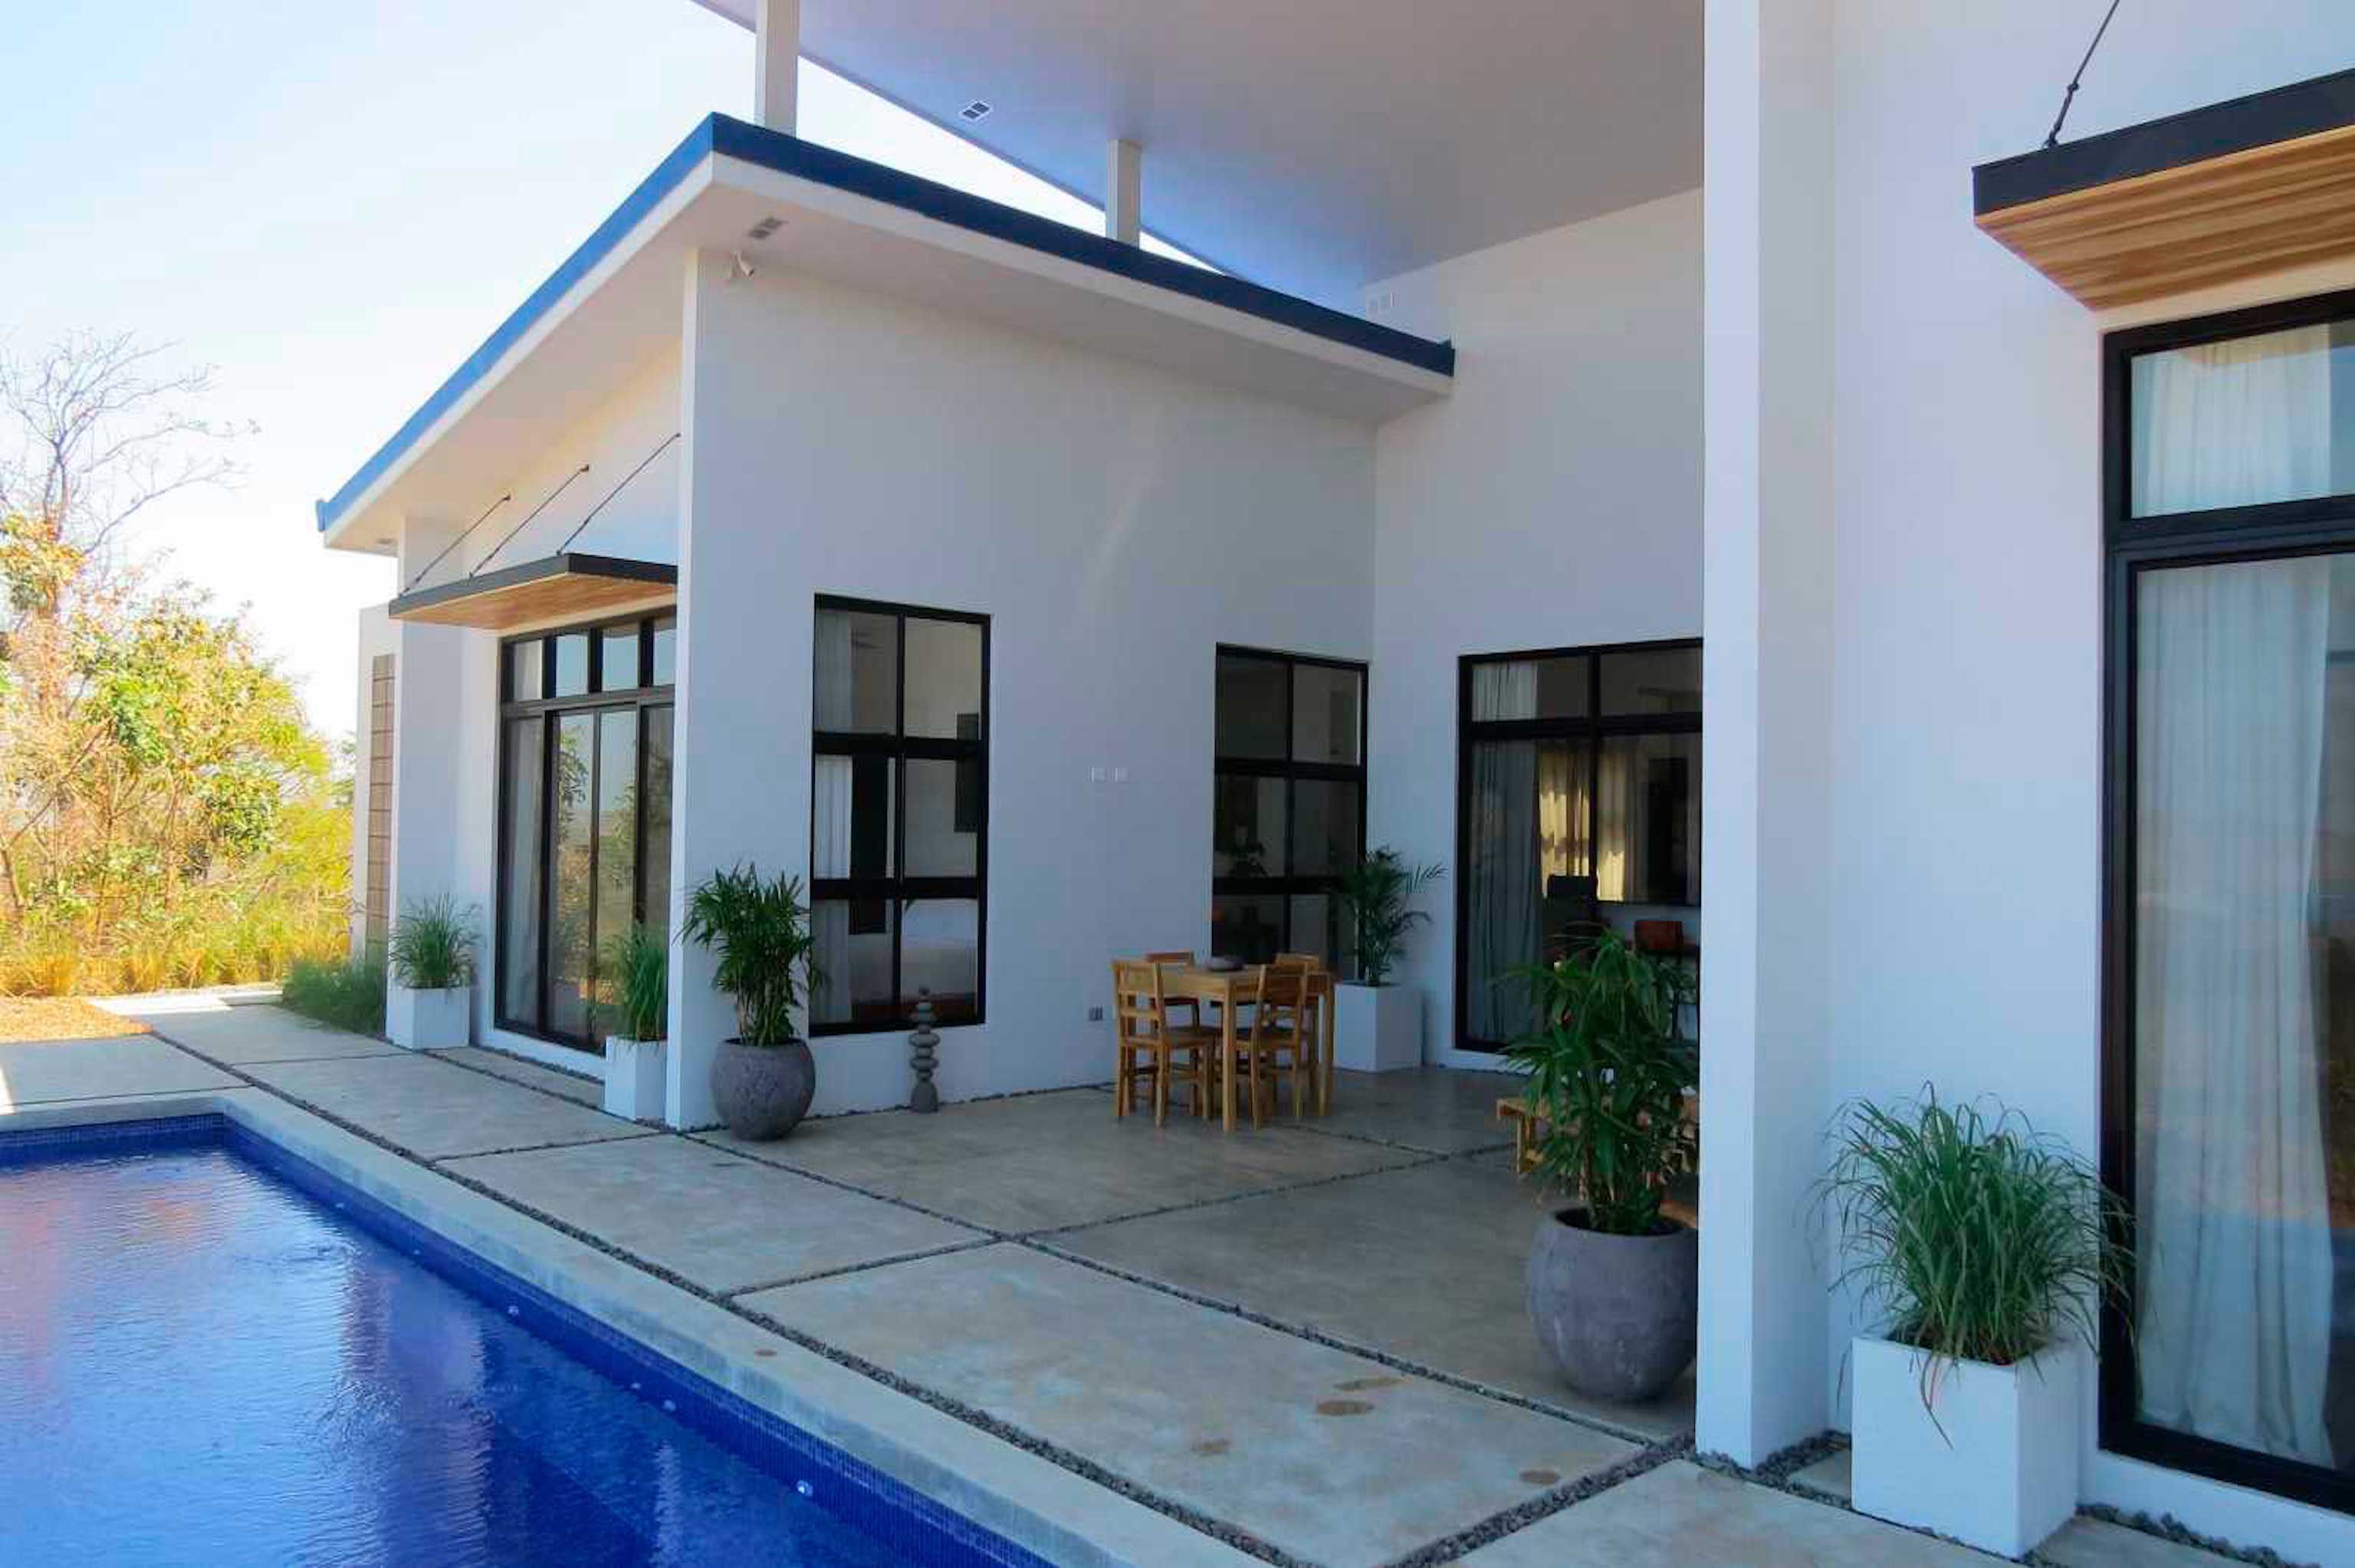 Casa-Azul-Playa-Tamarindo-ocean-views-three-bedrooms-infinity-pool-sunset-views-guanacaste-costa-rica